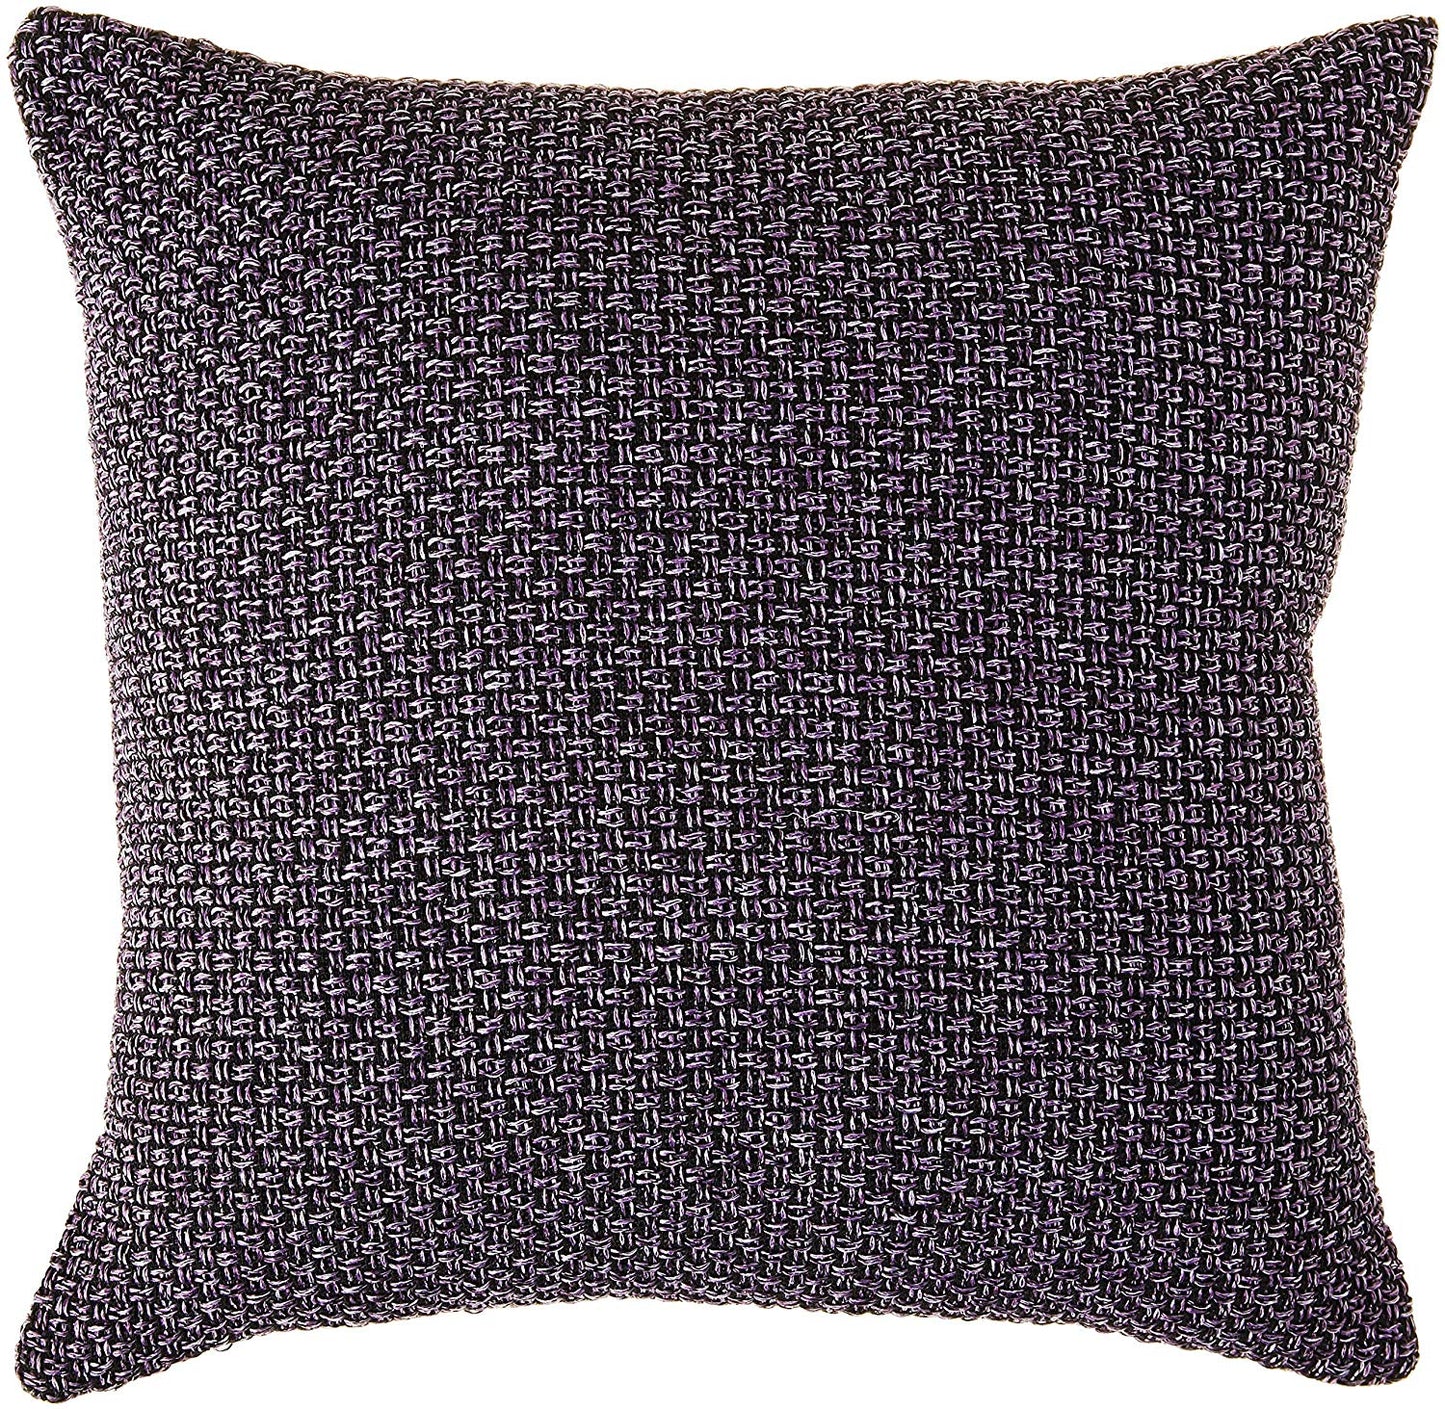 Chenille Basket Weave Design Decorative Throw Pillow Cover